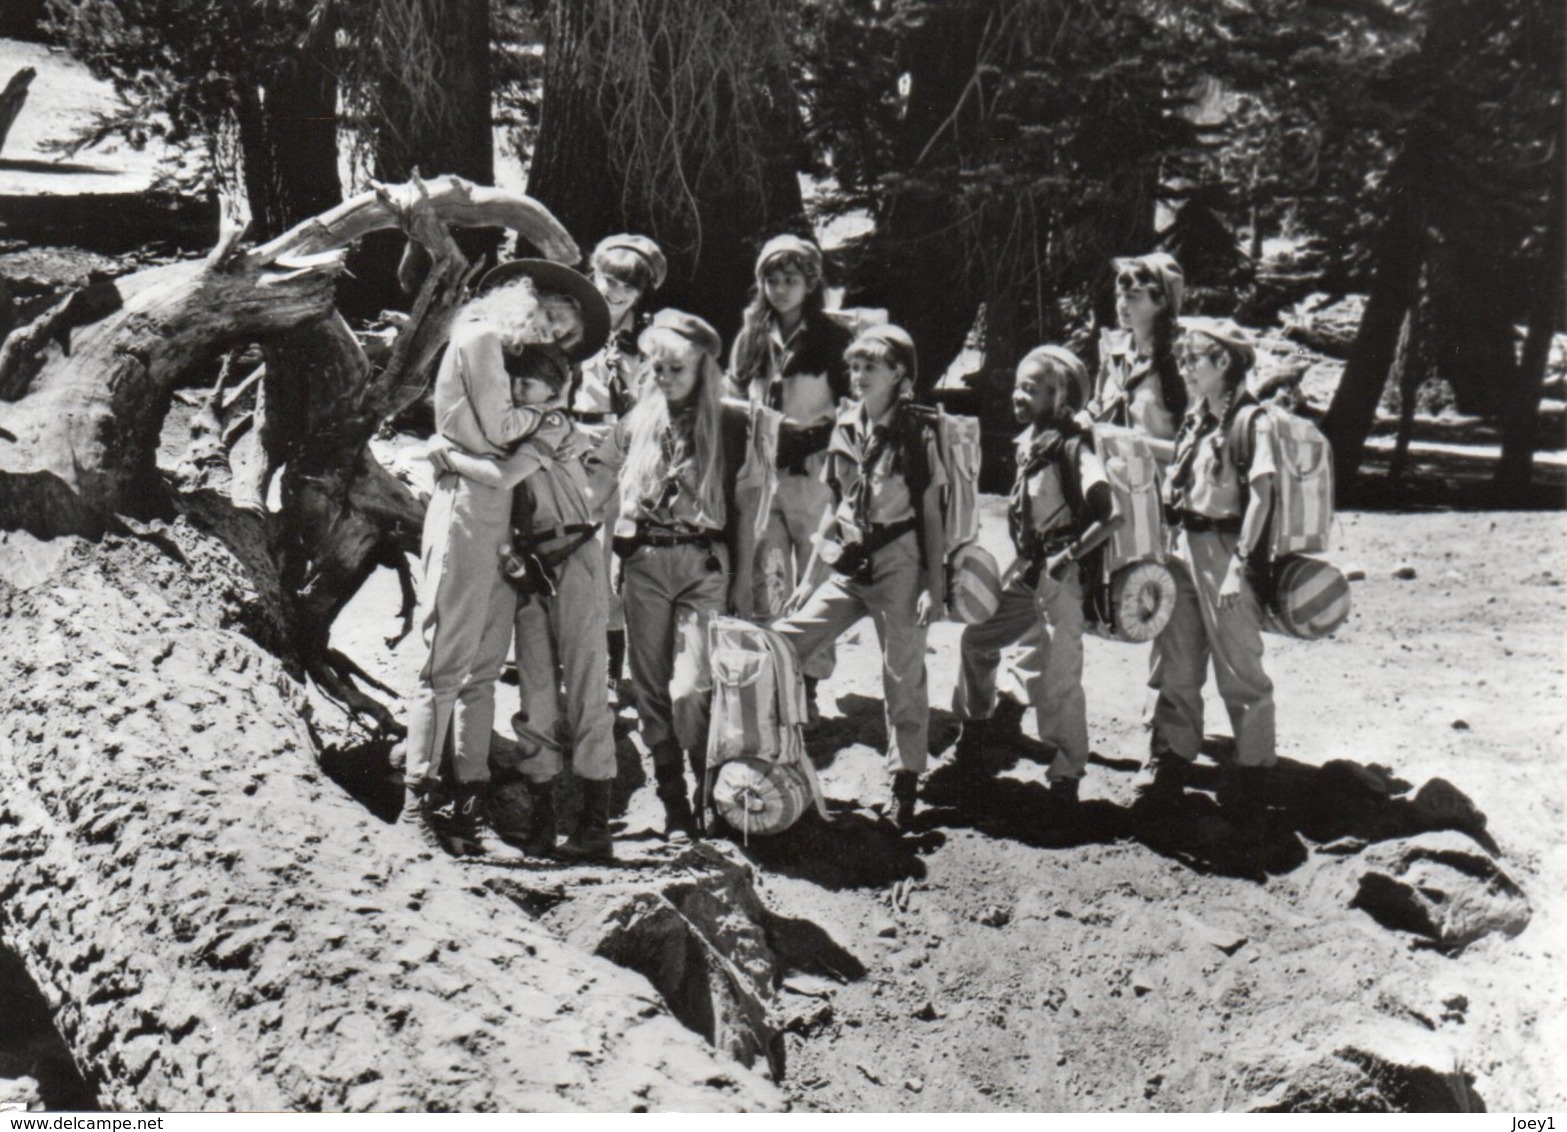 1 Lot De 7 Photos Du Film Les Scouts De Beverly Hills Sorti En 1989 Avec Shelley Long.format 13/18 - Beroemde Personen